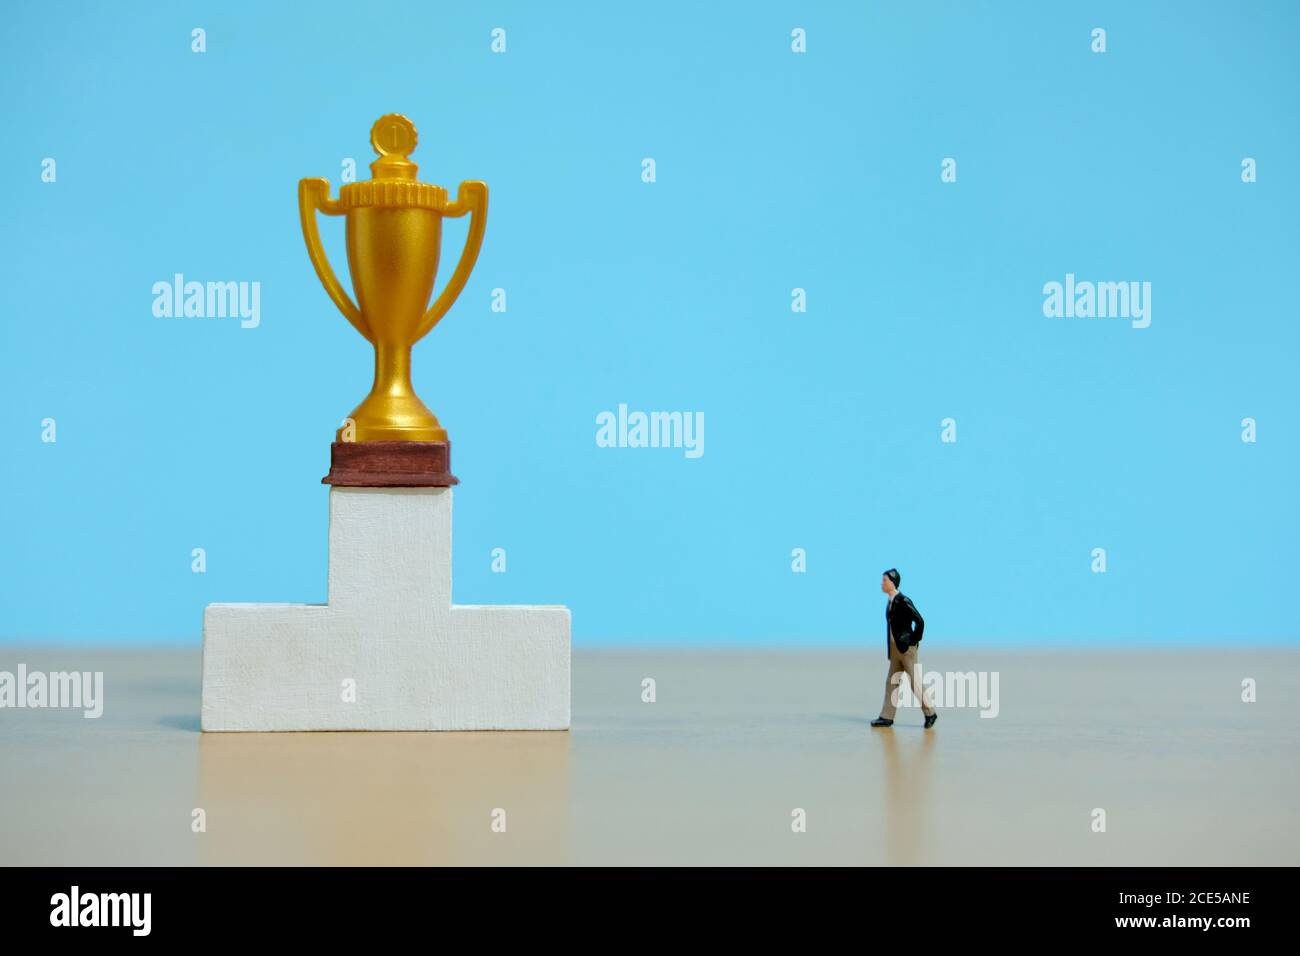 Miniature business concept - businessman walking toward golden trophy above white podium Stock Photo